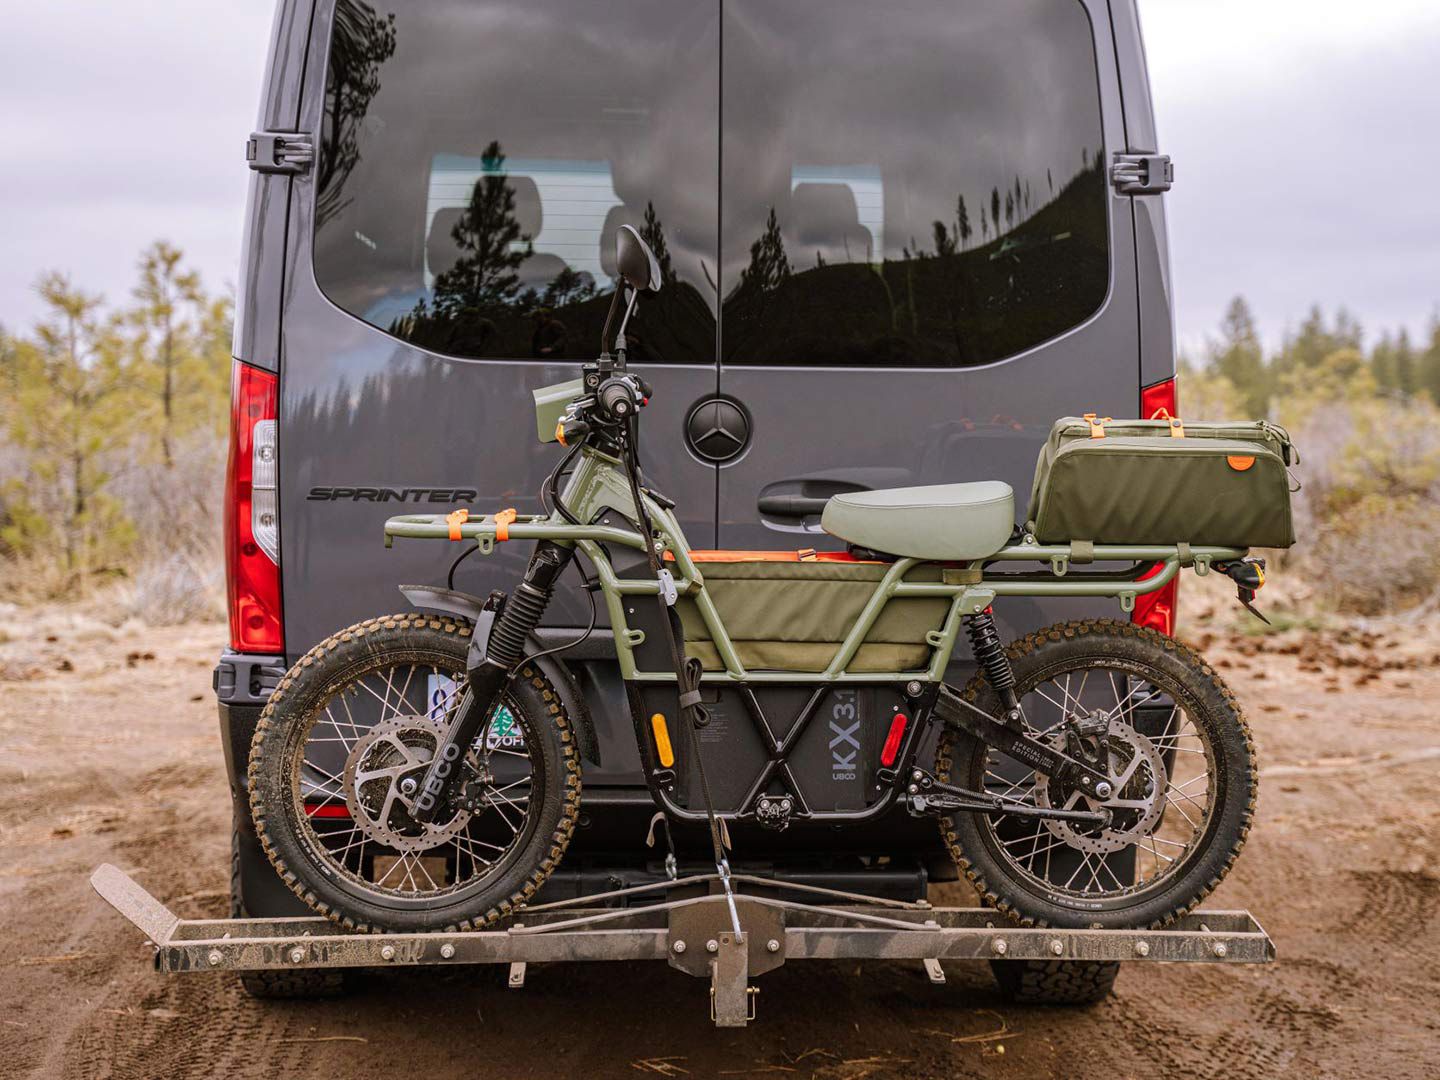 Muddy fun in Oregon: The UBCO 2x2 SE hitches a ride with Sprinter friend.